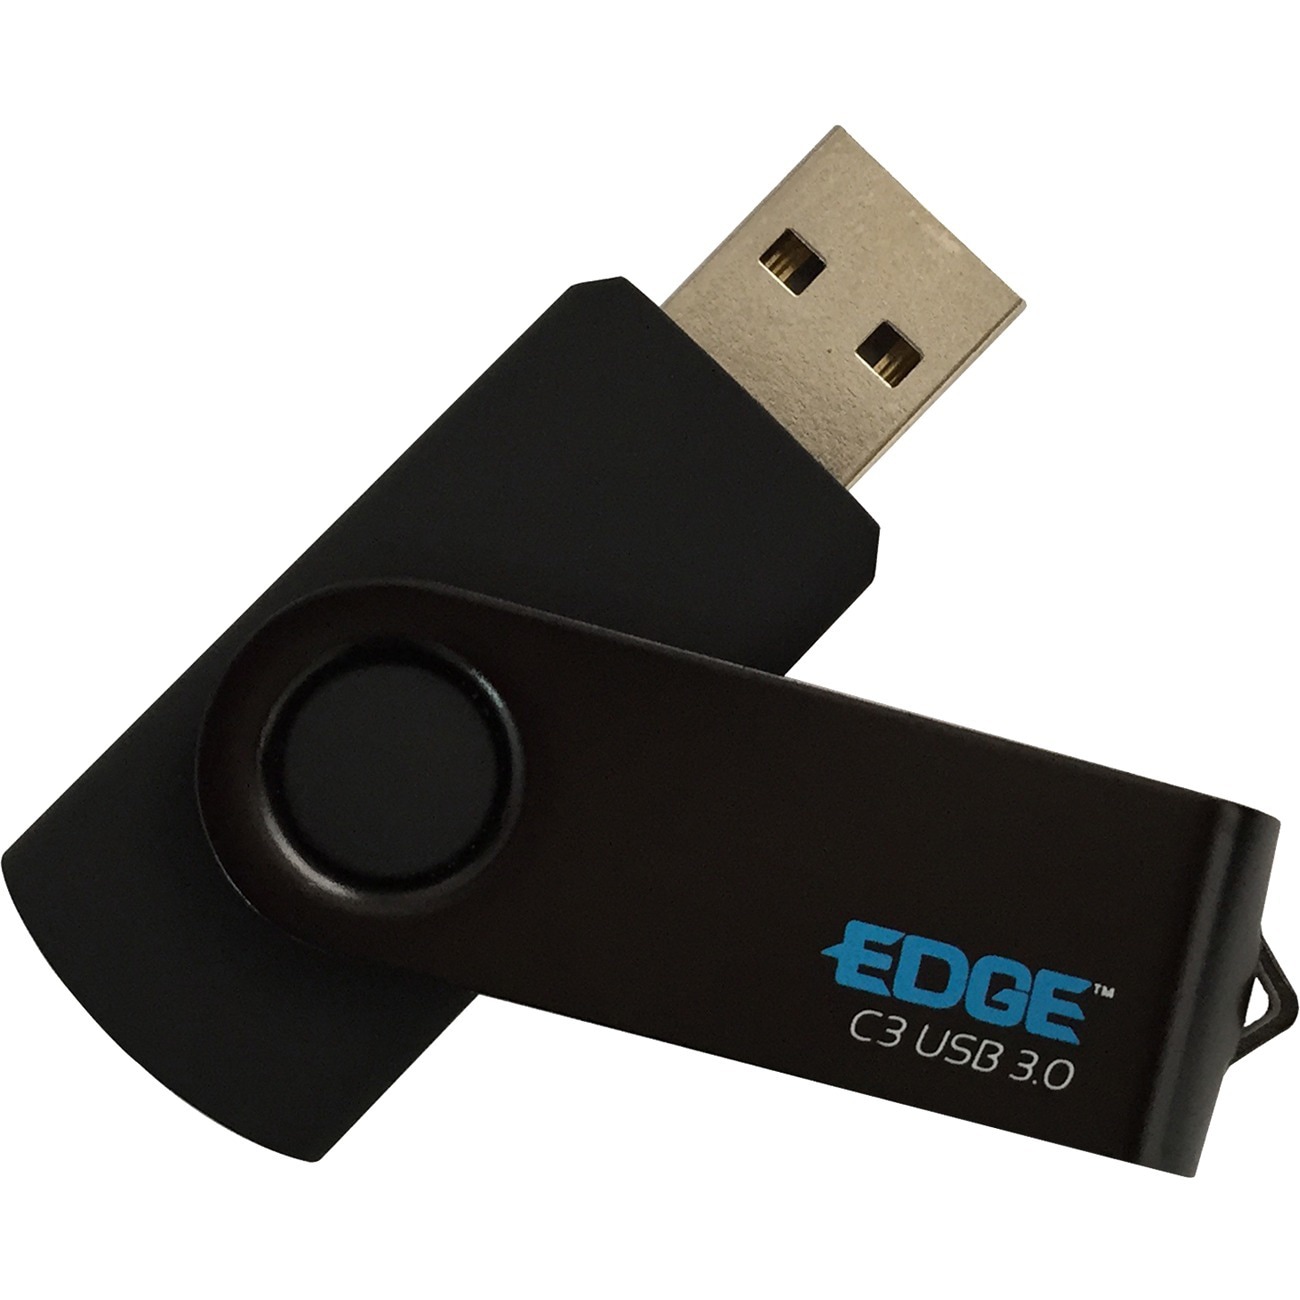 128GB C3 USB 3.0 Flash Drive - PE246983 - -